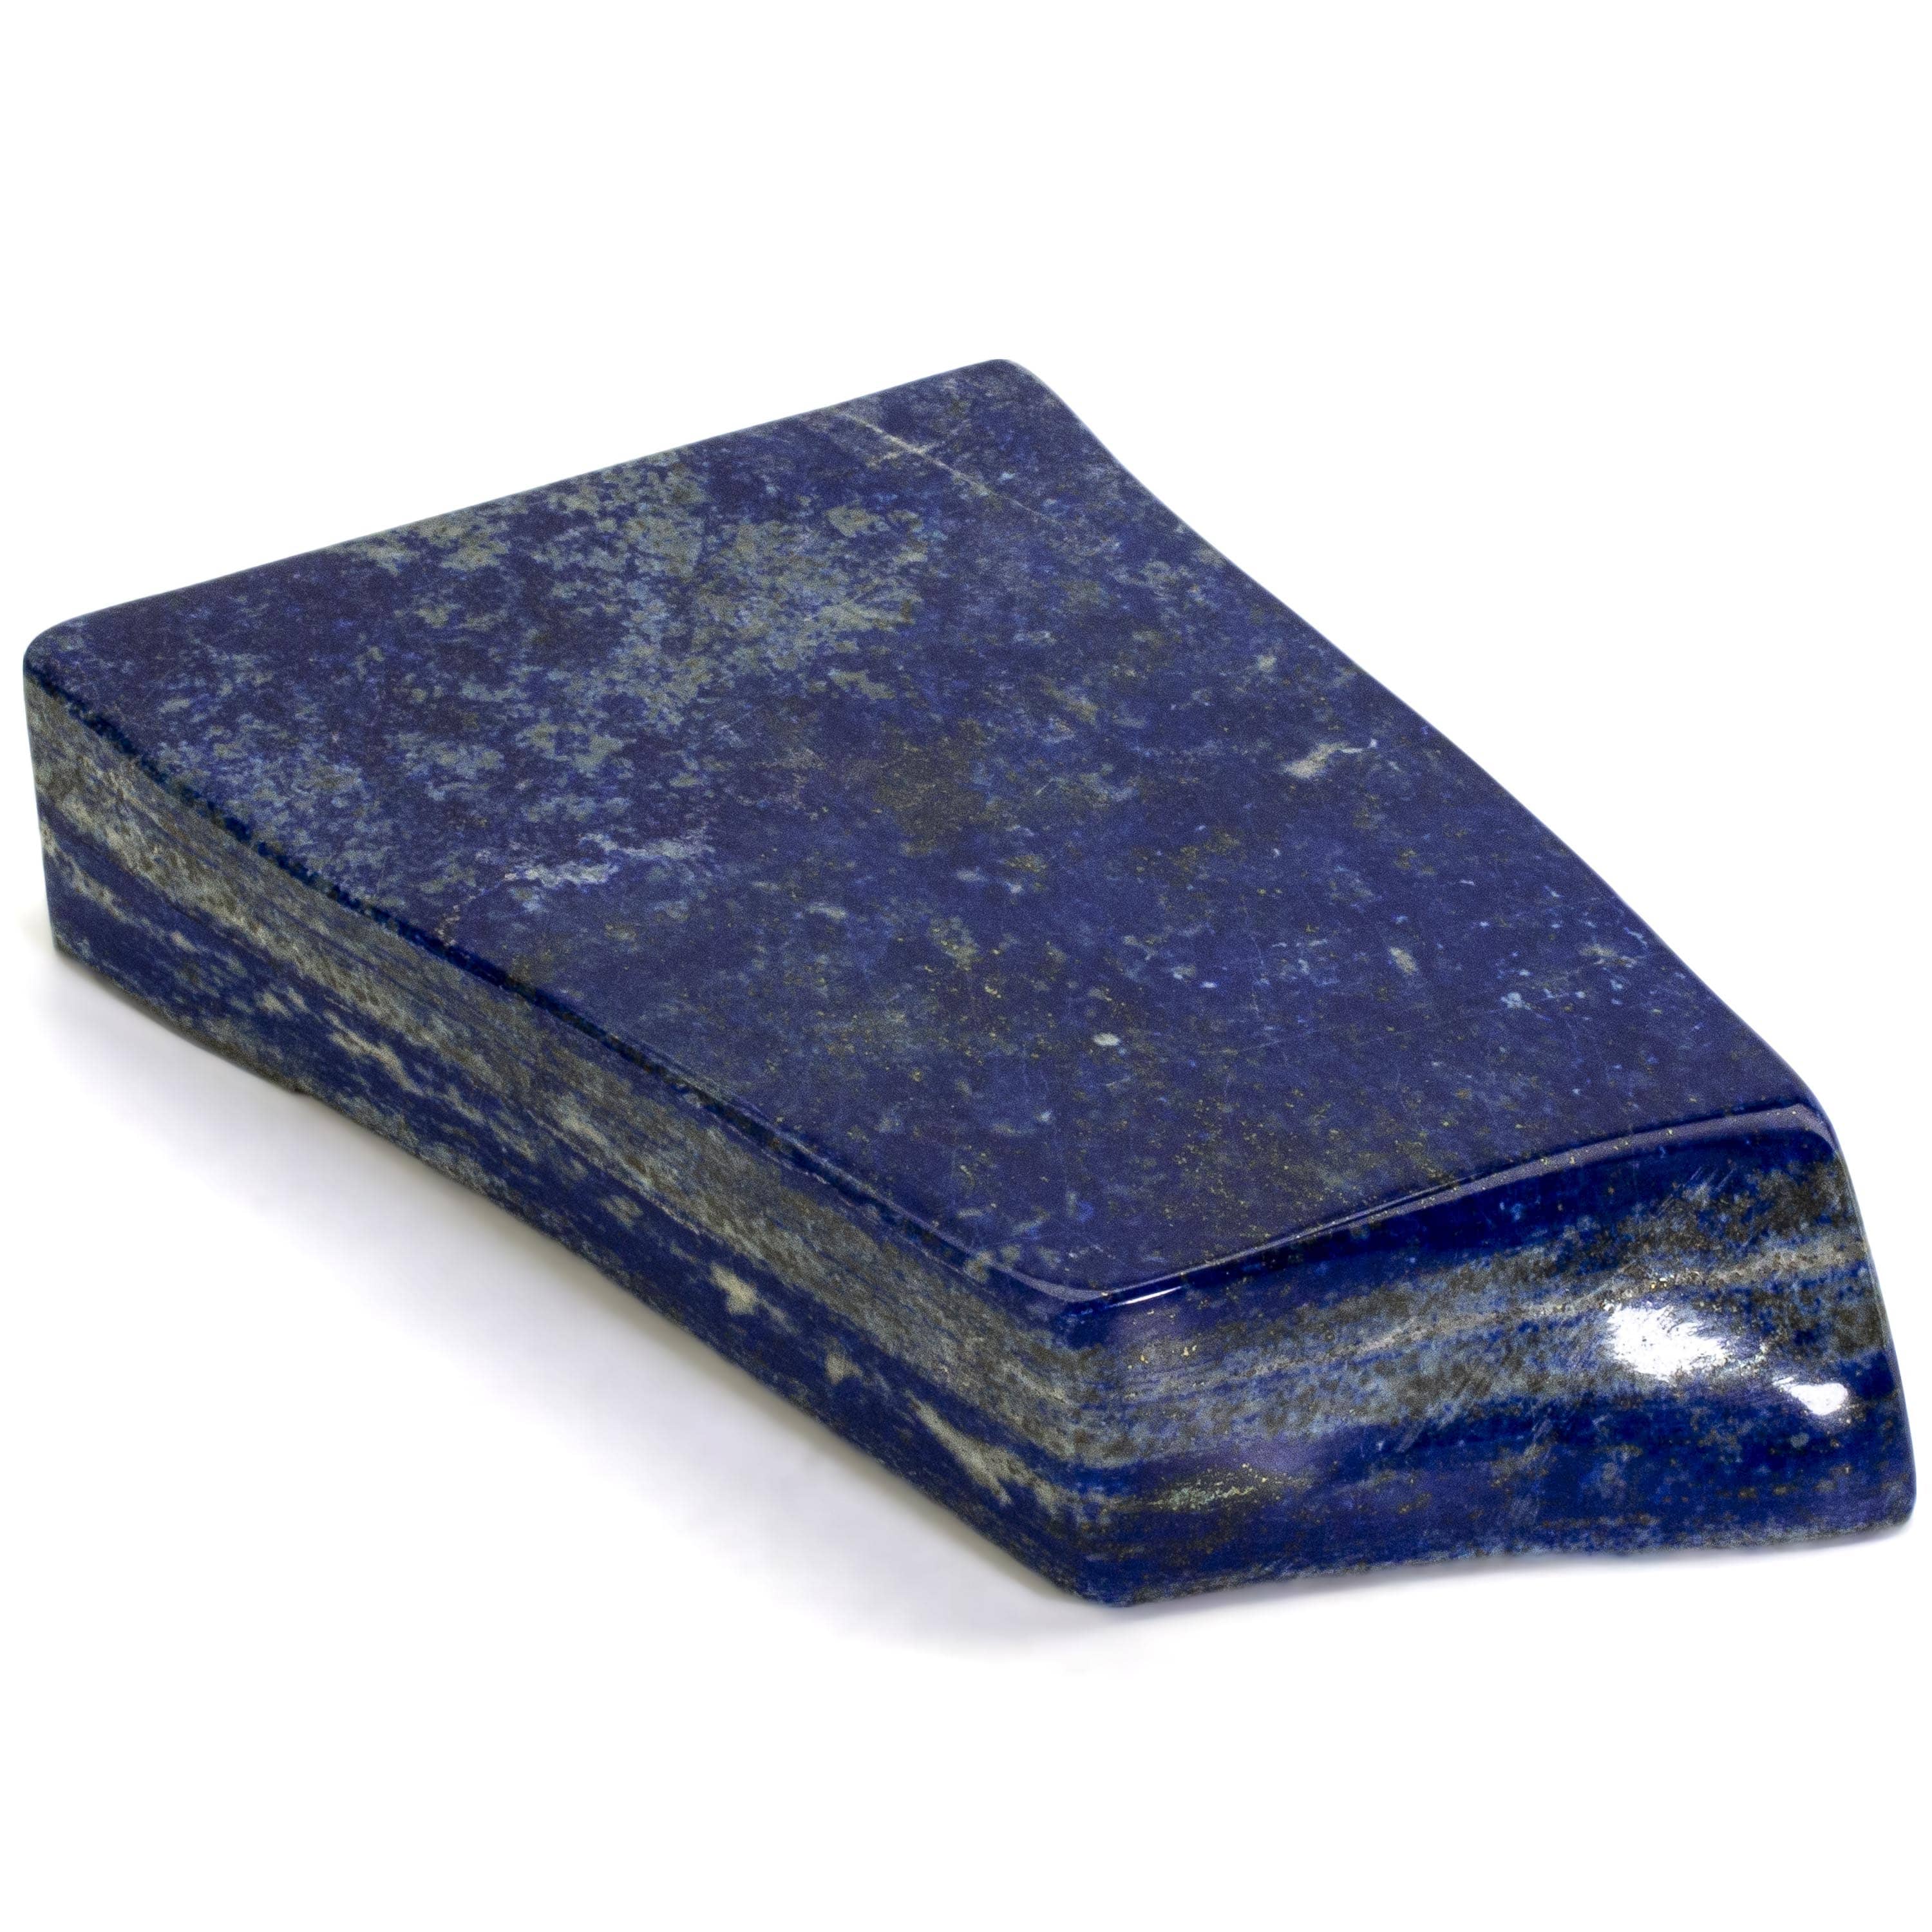 Kalifano Lapis Lapis Lazuli Freeform 6 in. / 1,030 grams LP1200.002